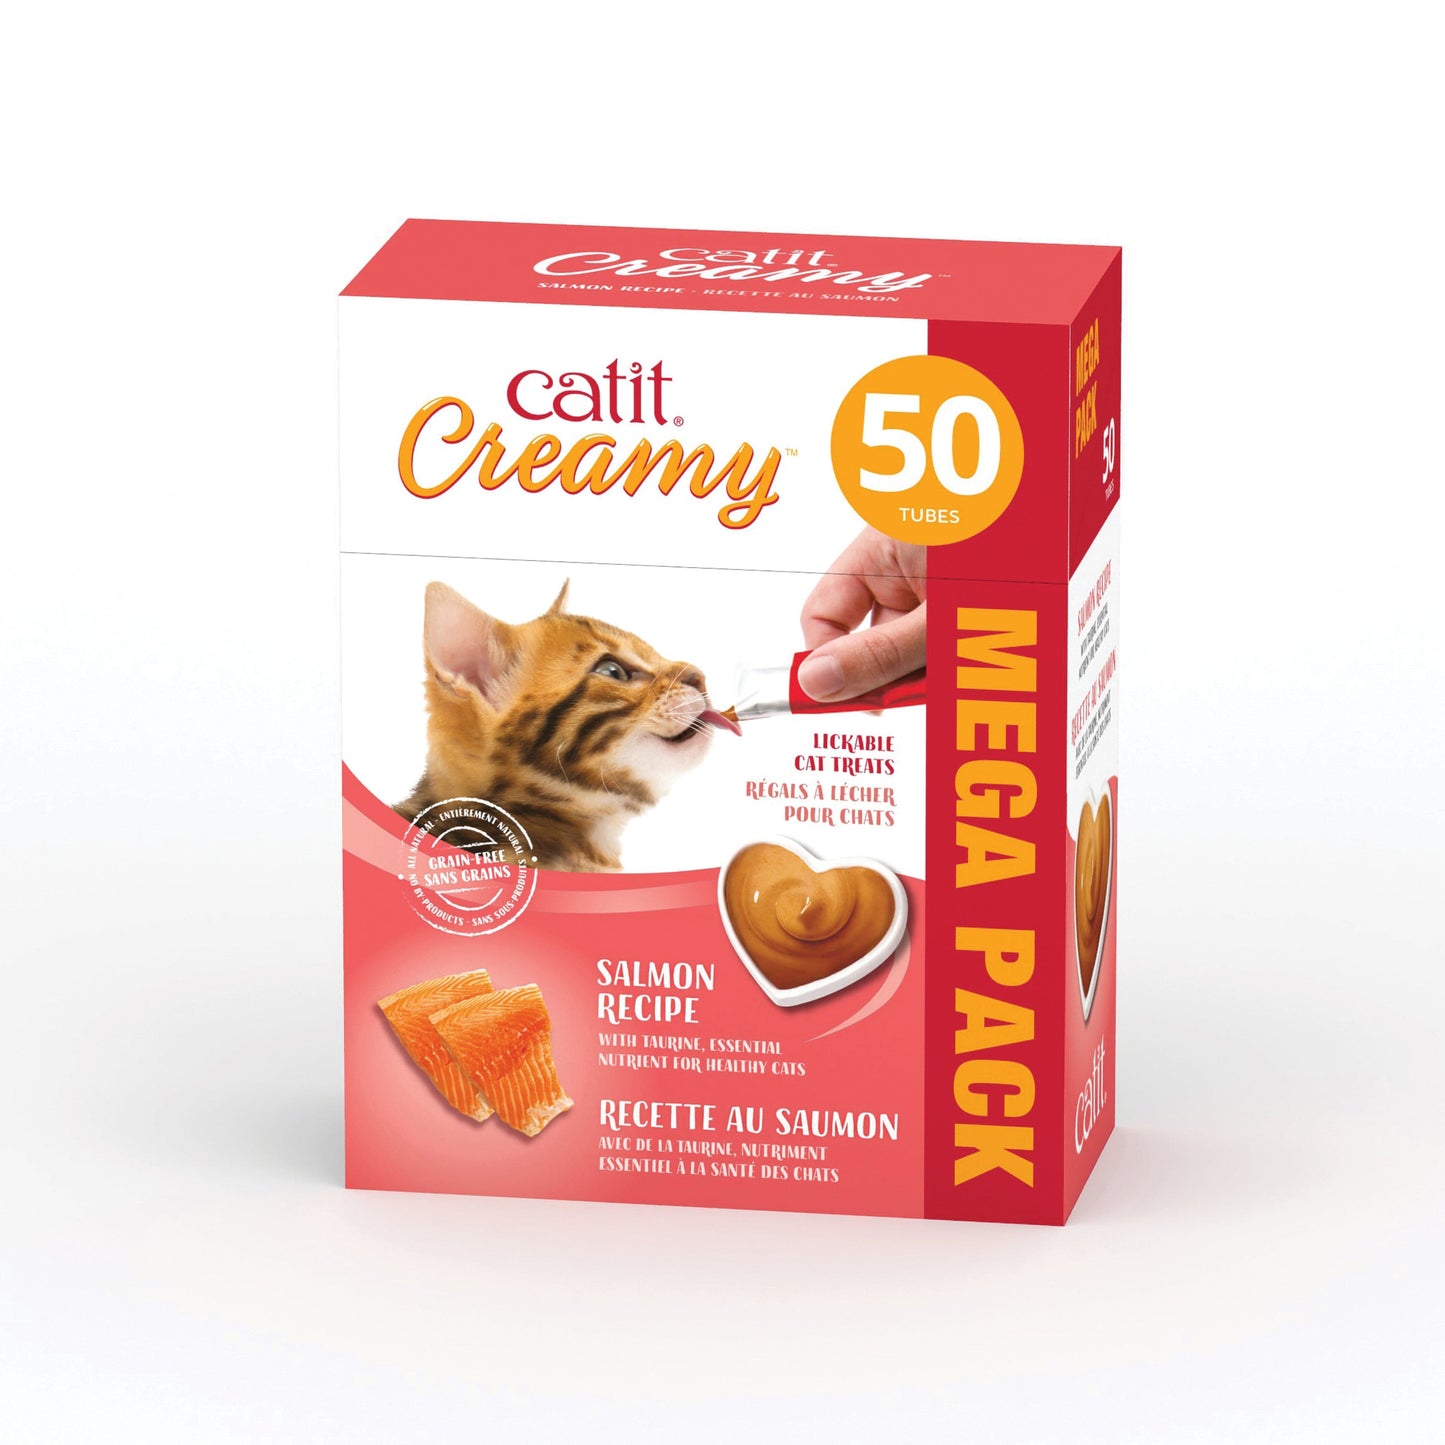 catit-creamy-cat-treats-50-pack